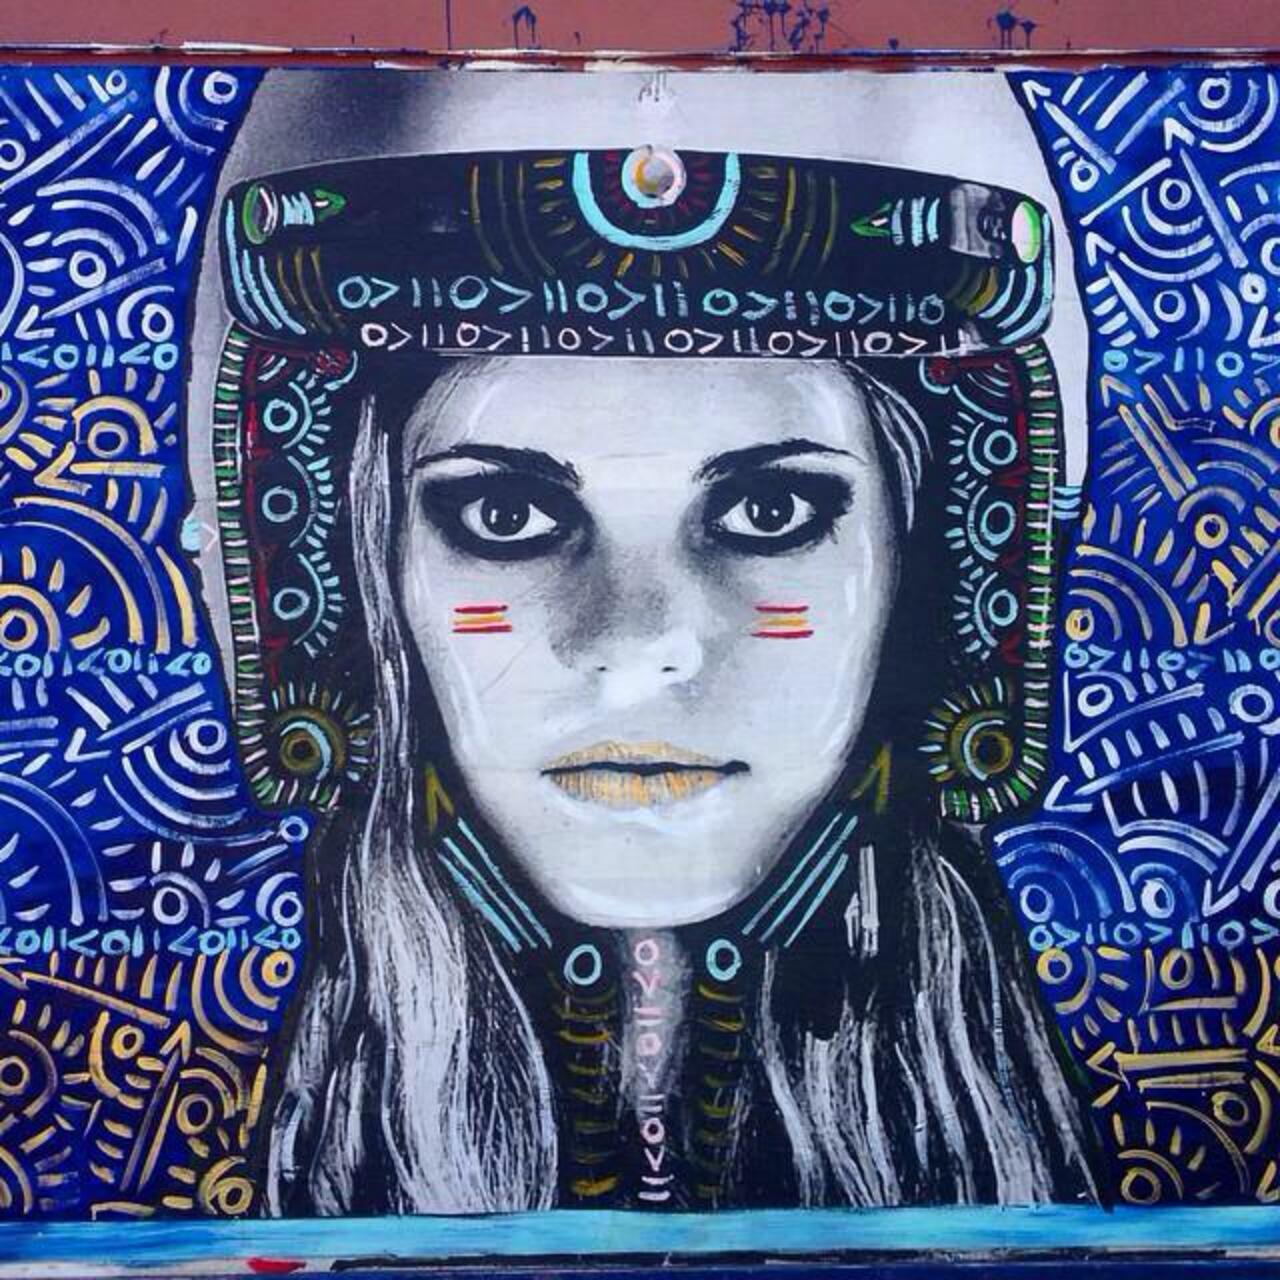 Street Art by Kelcey Fisher in LA
Photo by djcatnap

#art #arte #graffiti #streetart http://t.co/3r5l4tg9Qb